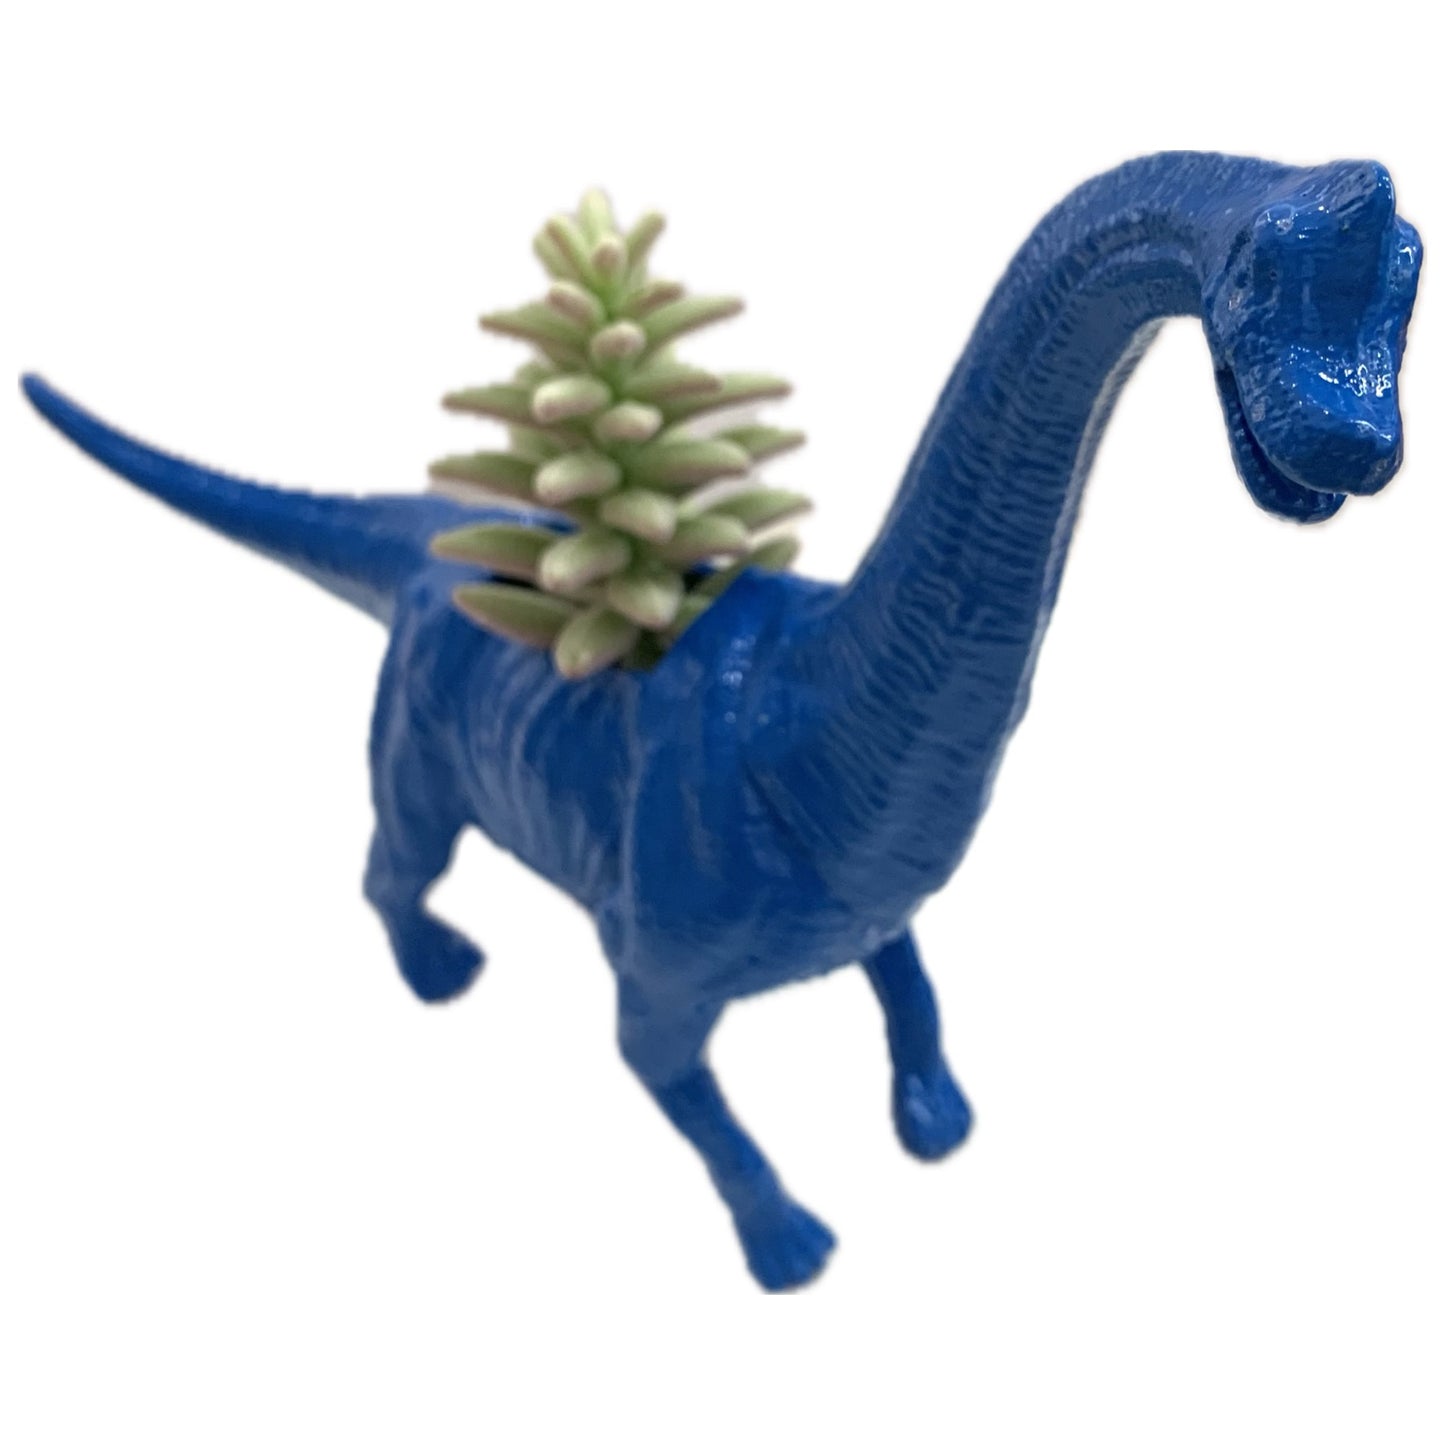 MAKIN' WHOOPEE -  Dino Planters- Bright Blue Brachiosaurus